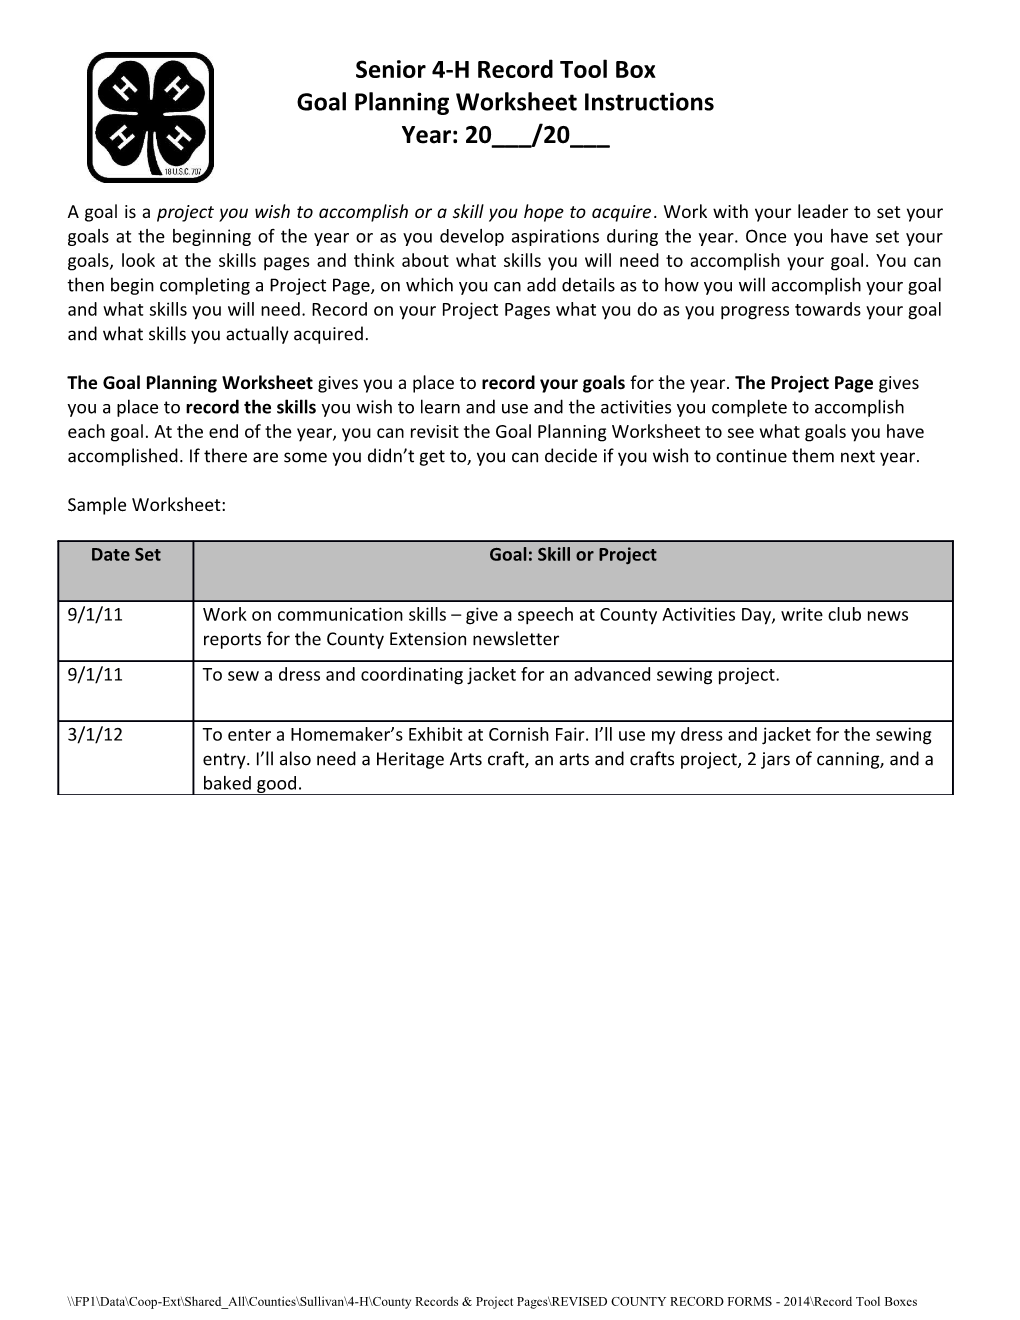 Goal Planning Worksheet Instructions